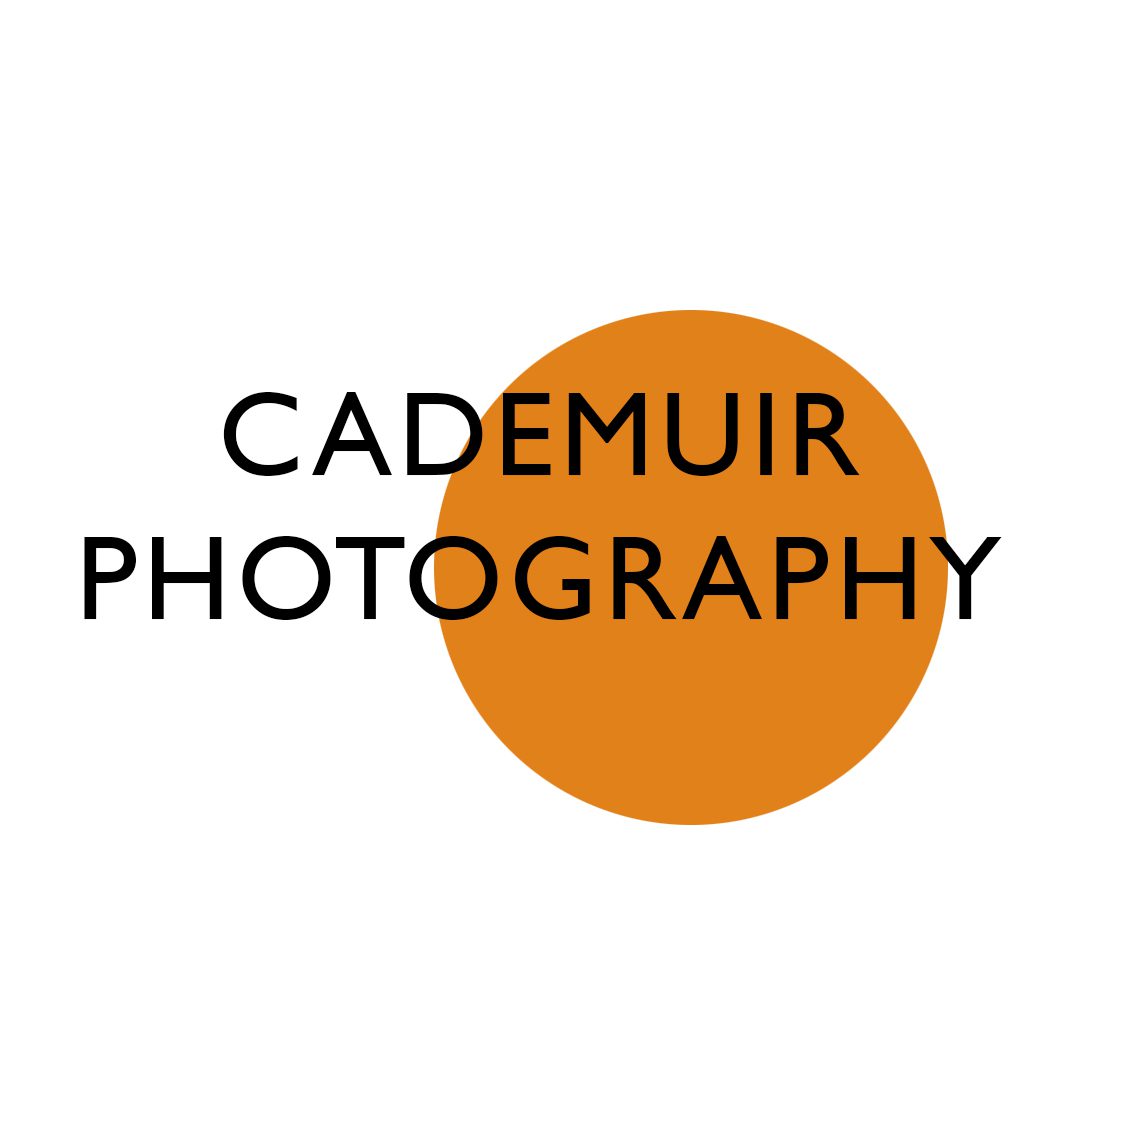 cademuir photography logo orange circle with bold capitalised font CADEMUIR PHOTOGRAPHY